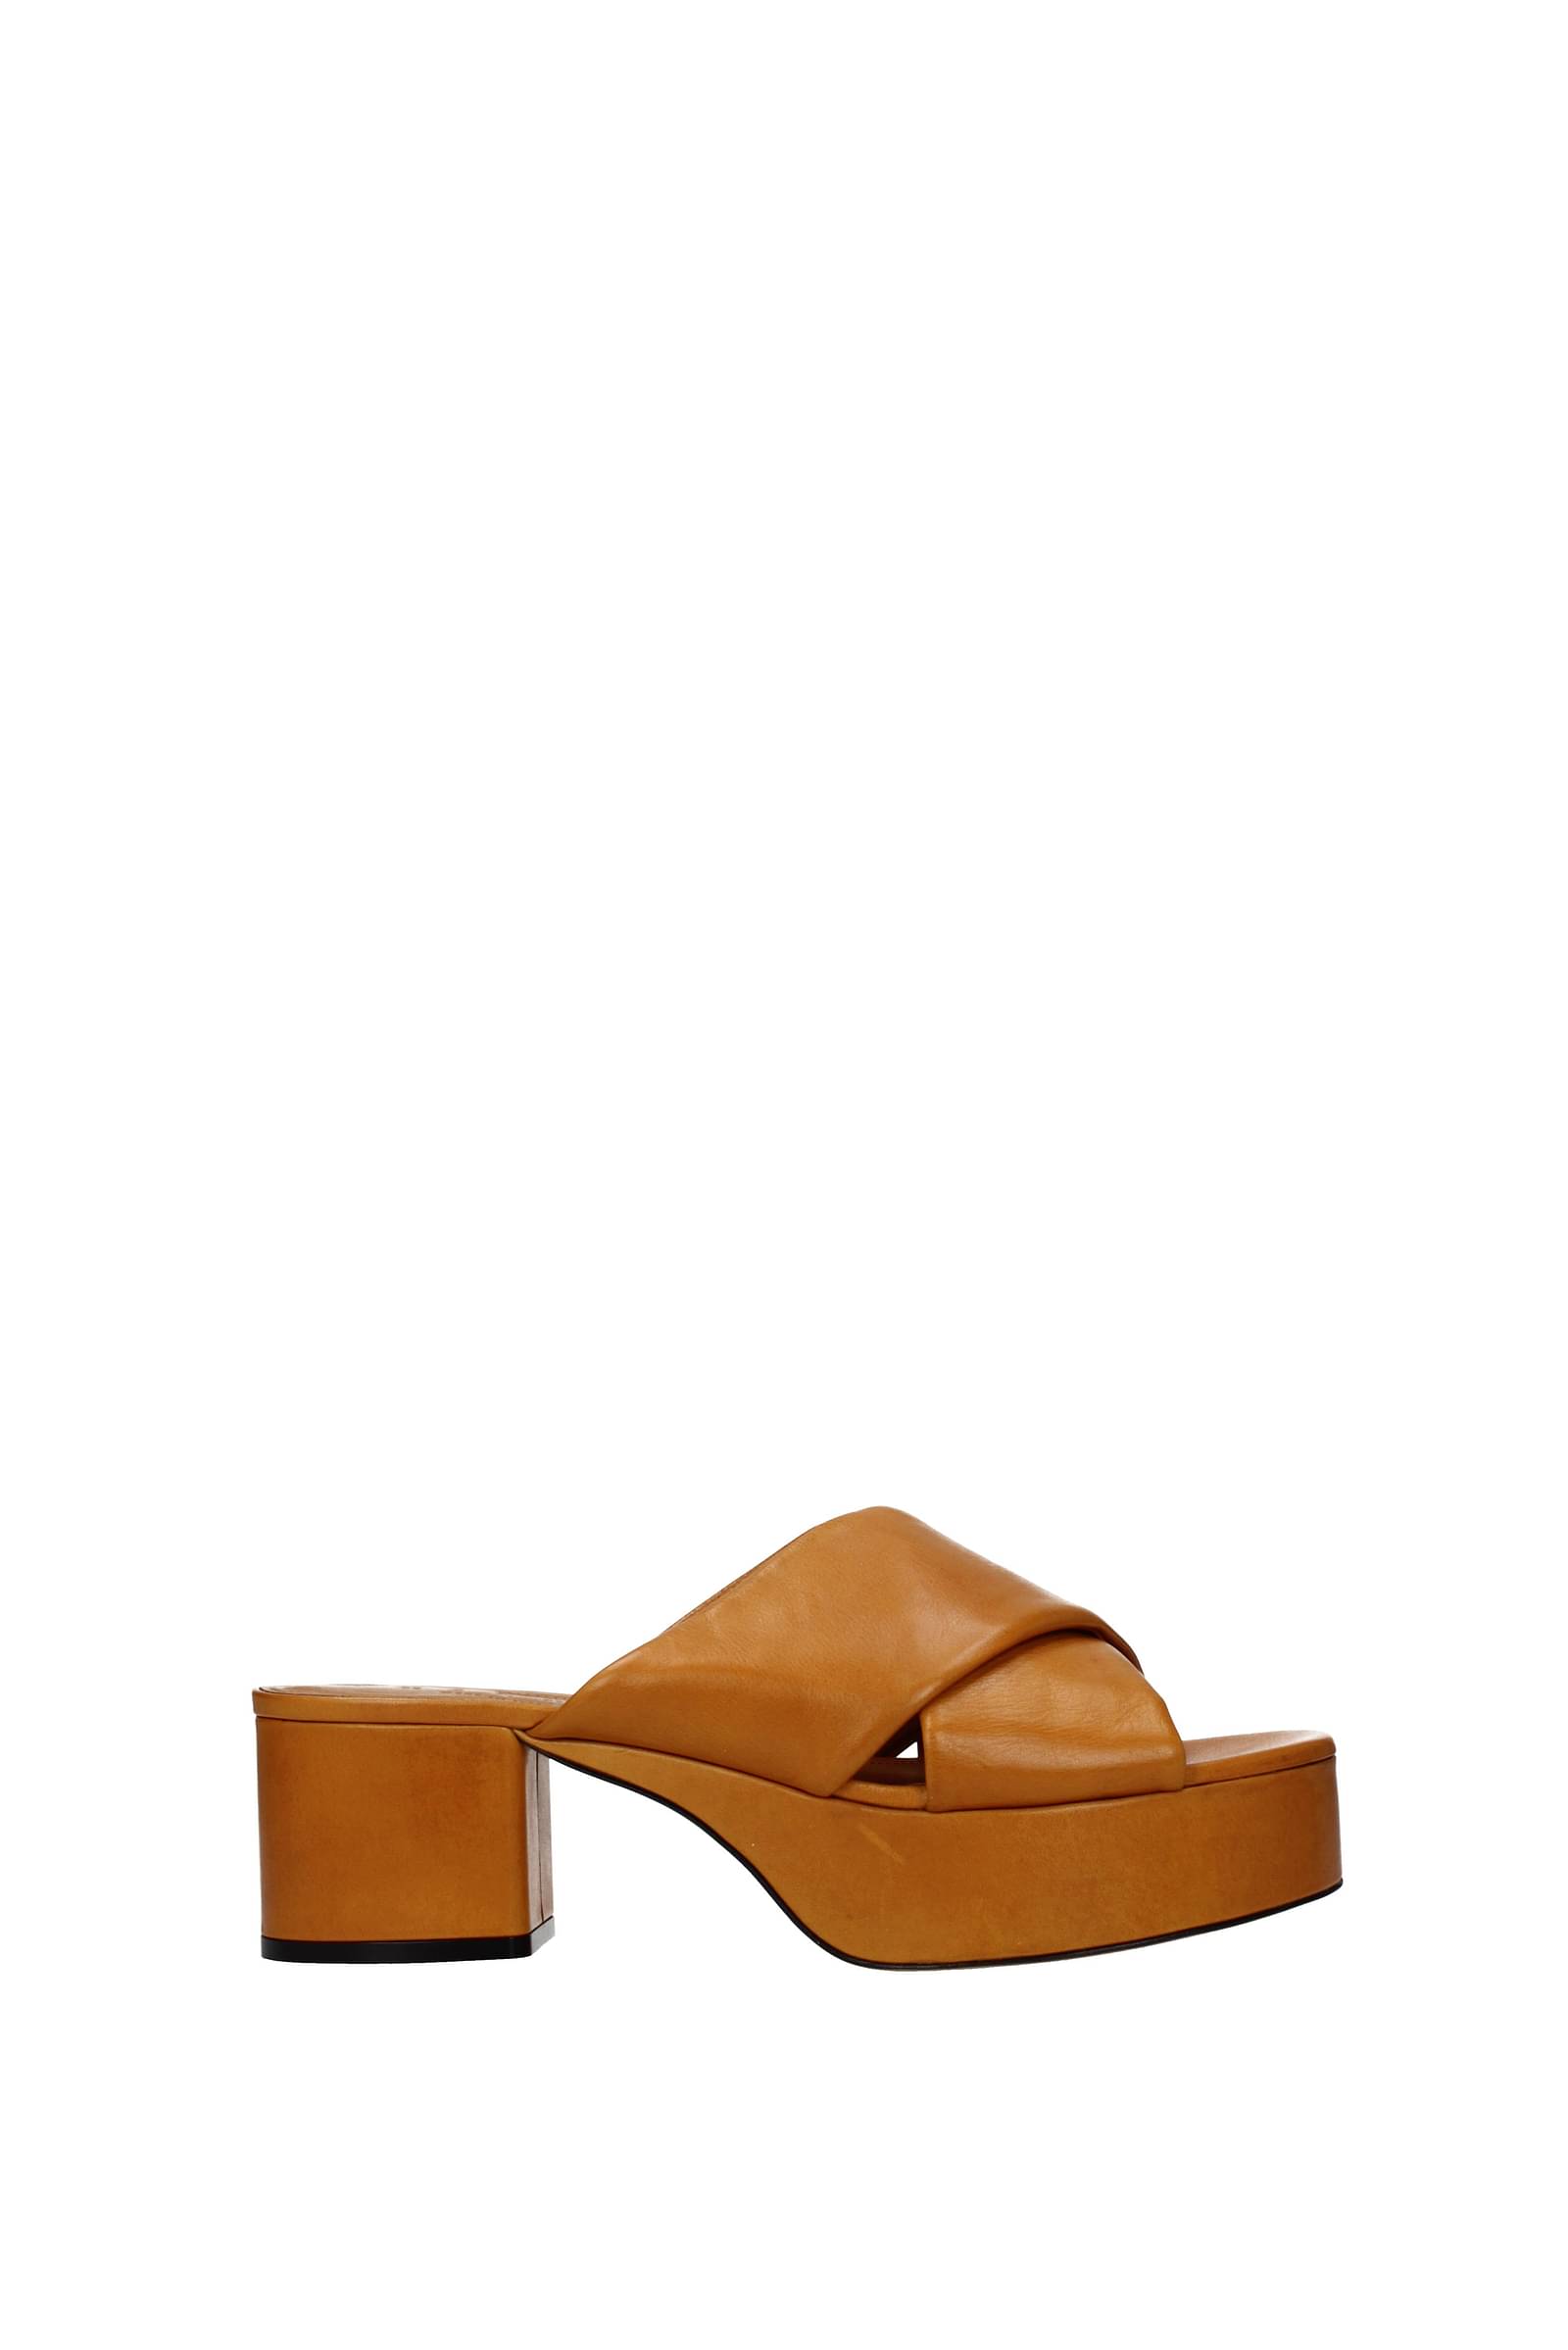 【MARNI】 Leather sandal size41 2017ss